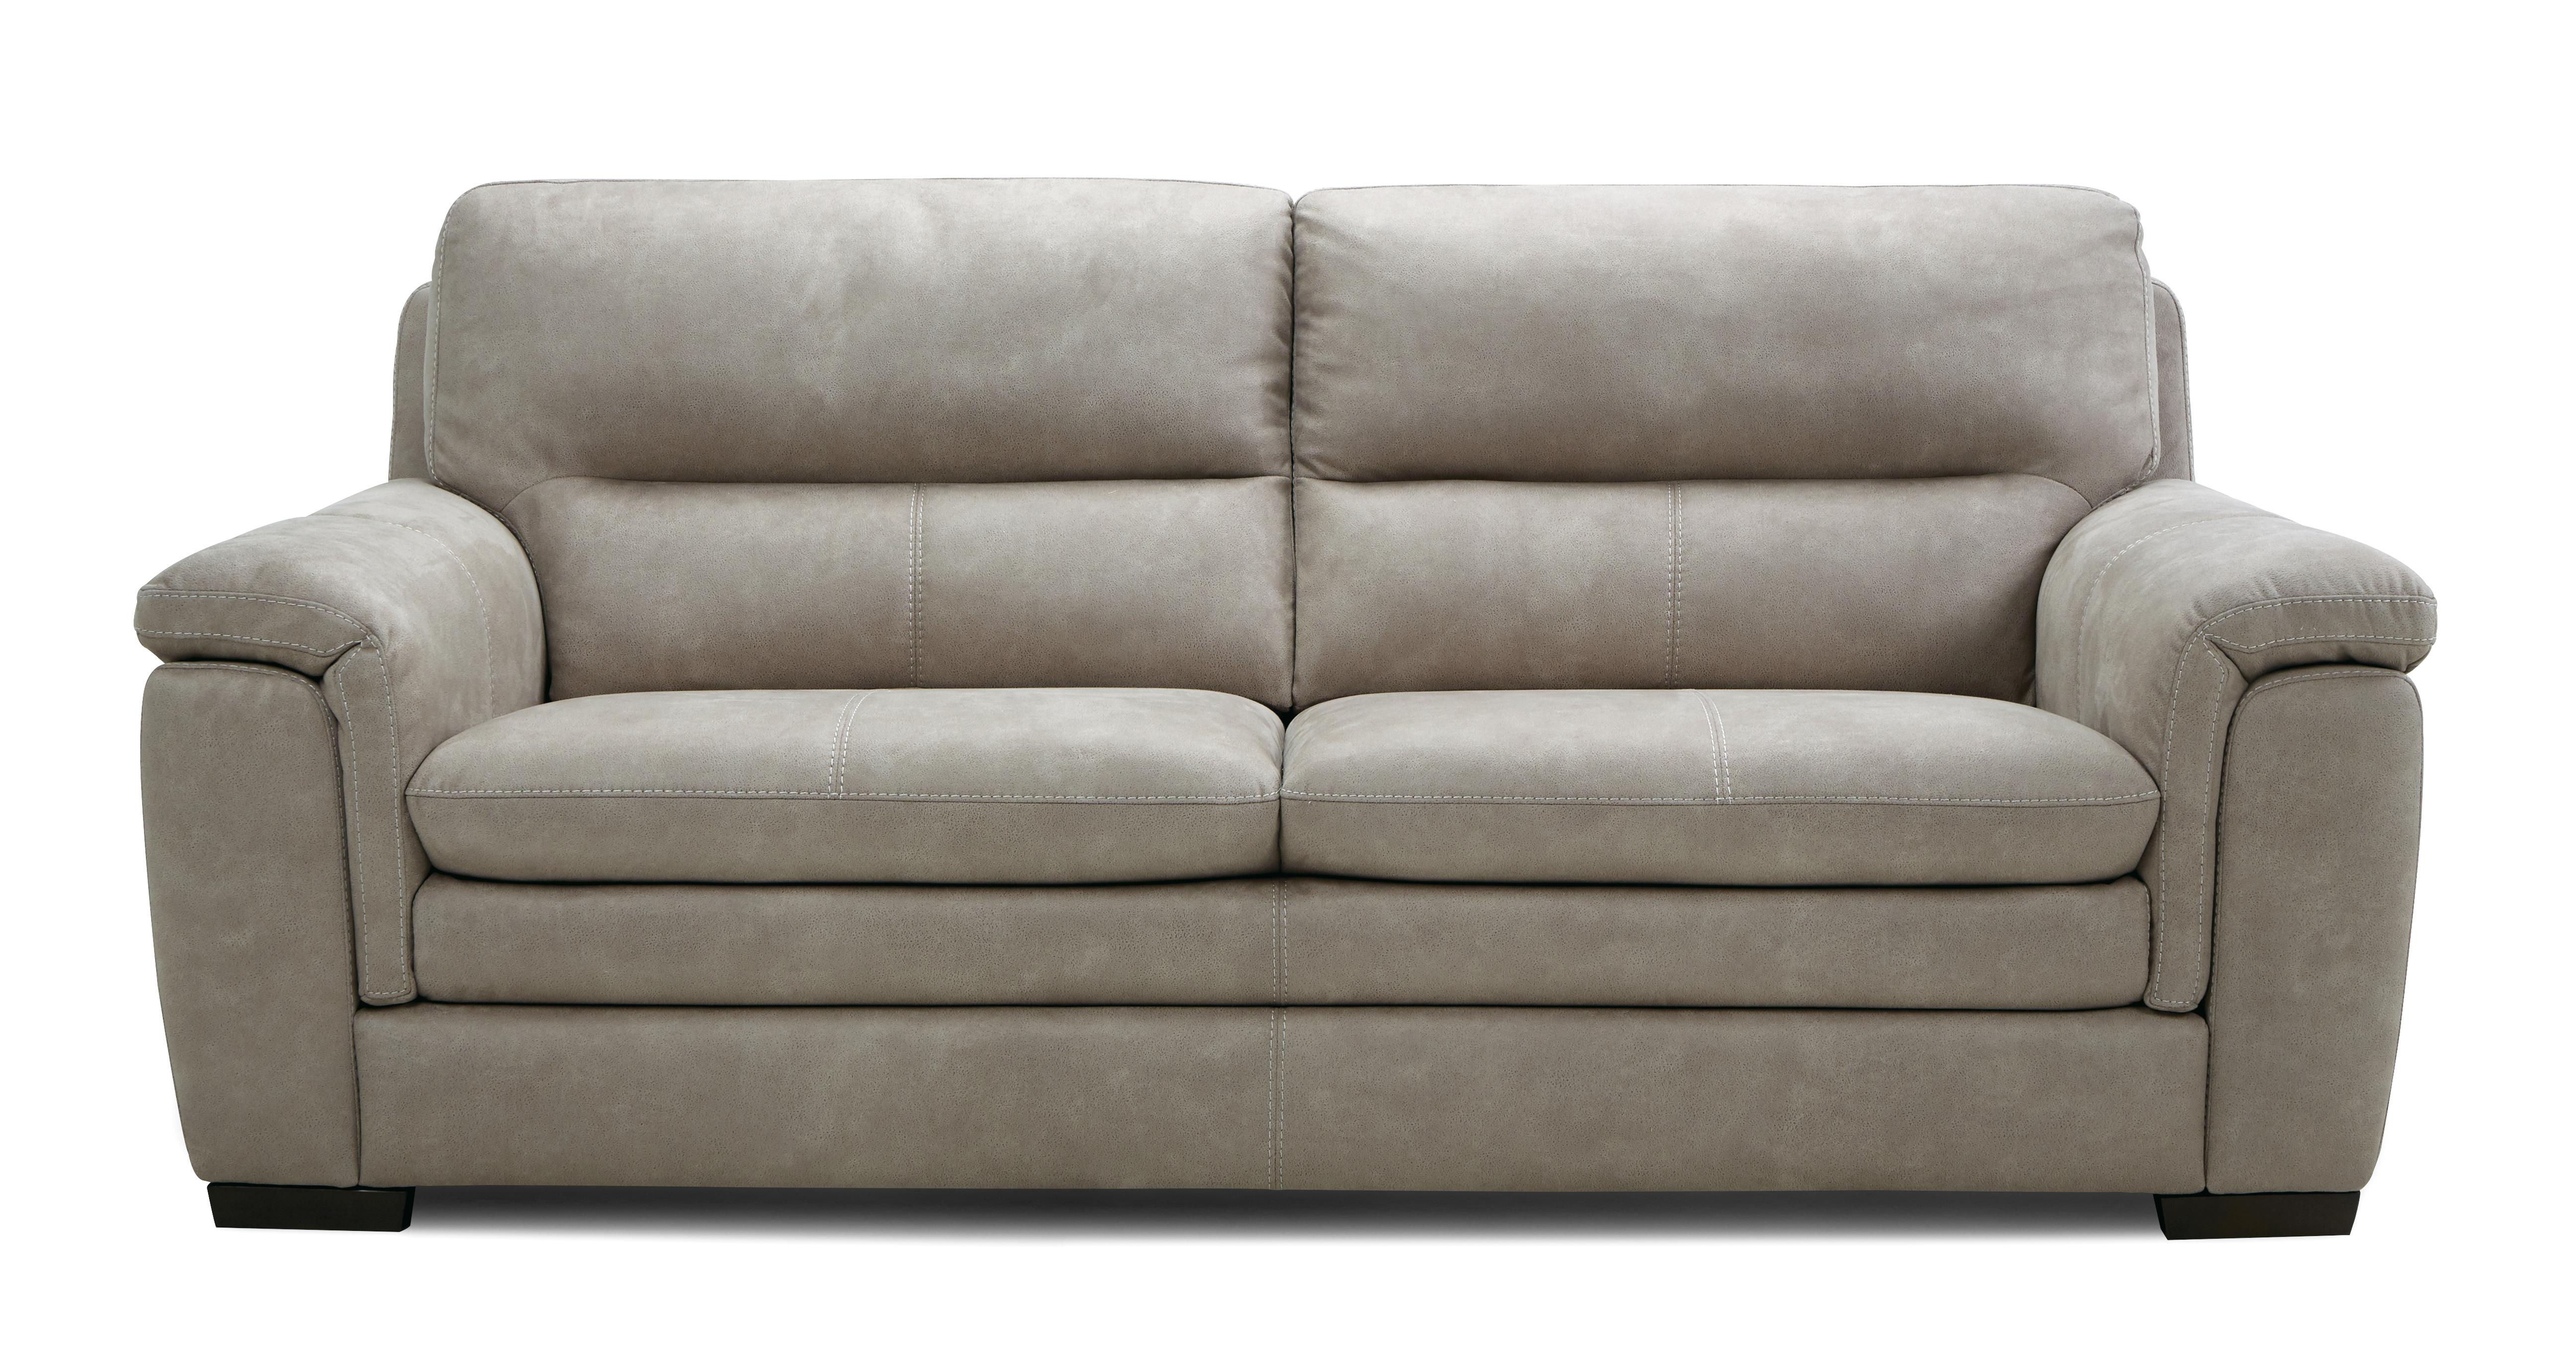 Elm Fabric 3 Seater Sofa Arizona Dfs, Where Is Arizona Leather Furniture Made